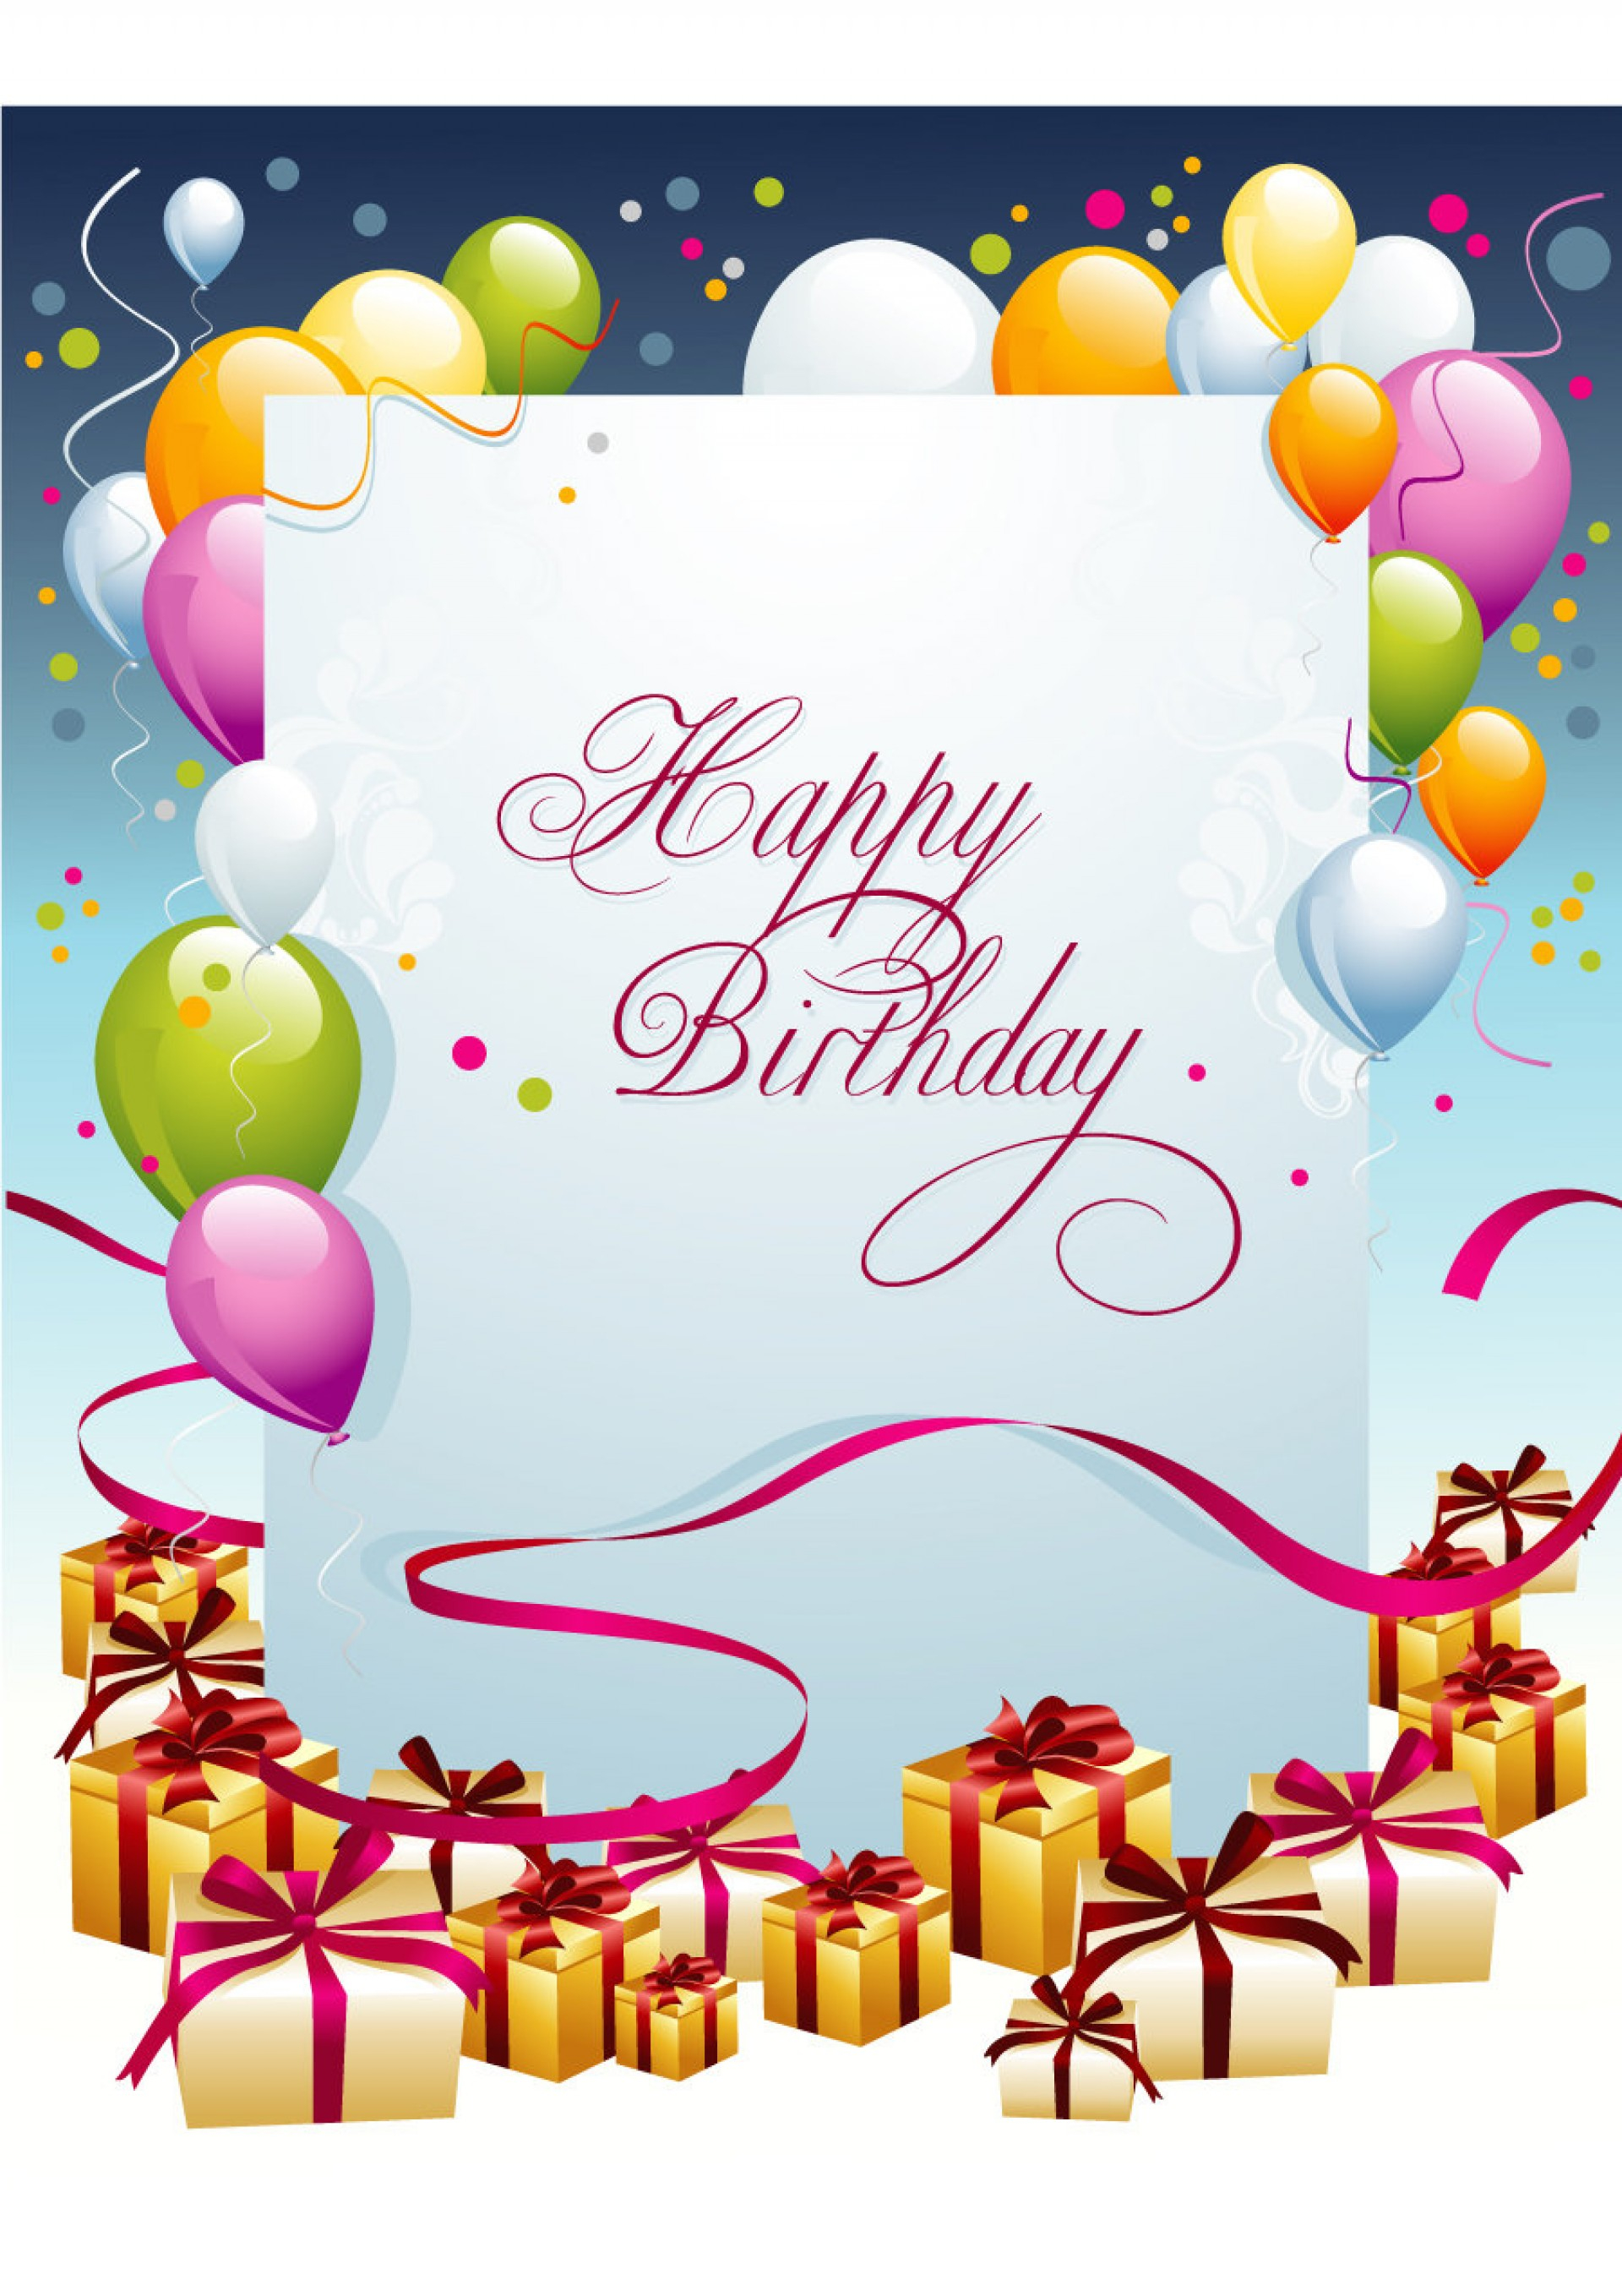 Idea For Birthday Card 004 Birthday Card Template Ideas Unforgettable Blank Online Free